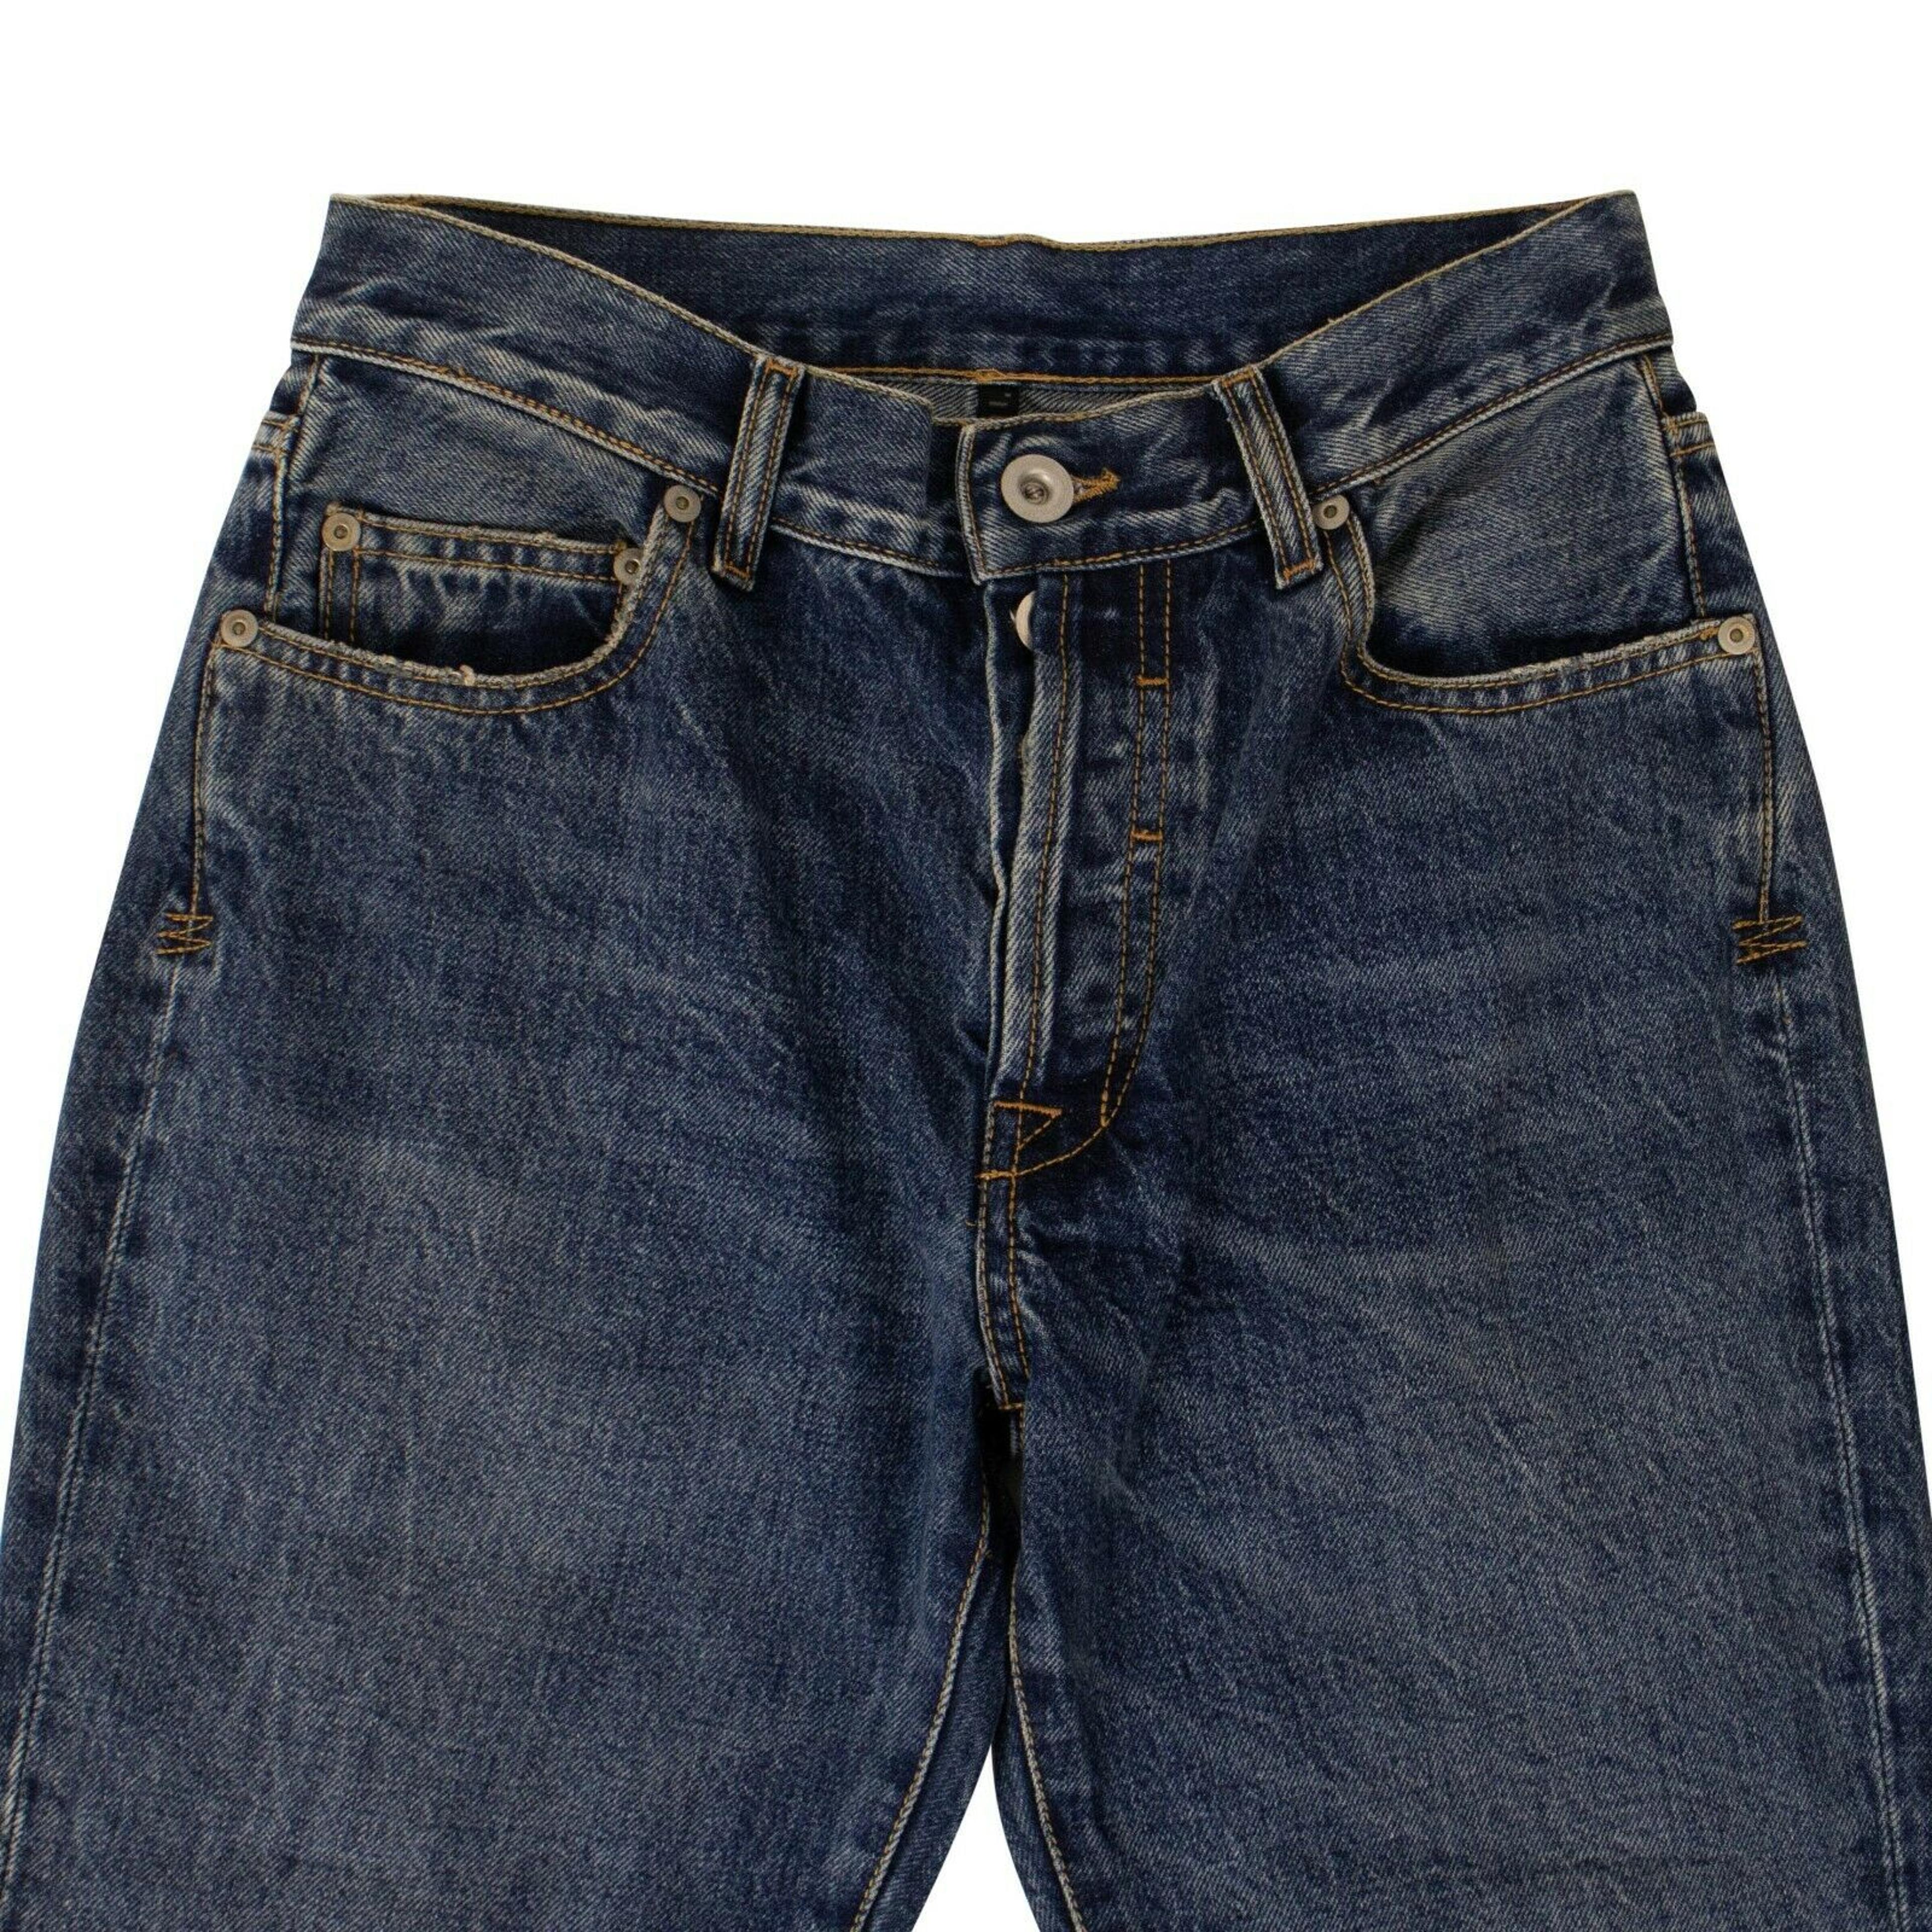 Alternate View 2 of Unravel Project Five Pocket Design Jeans Pants - Blue